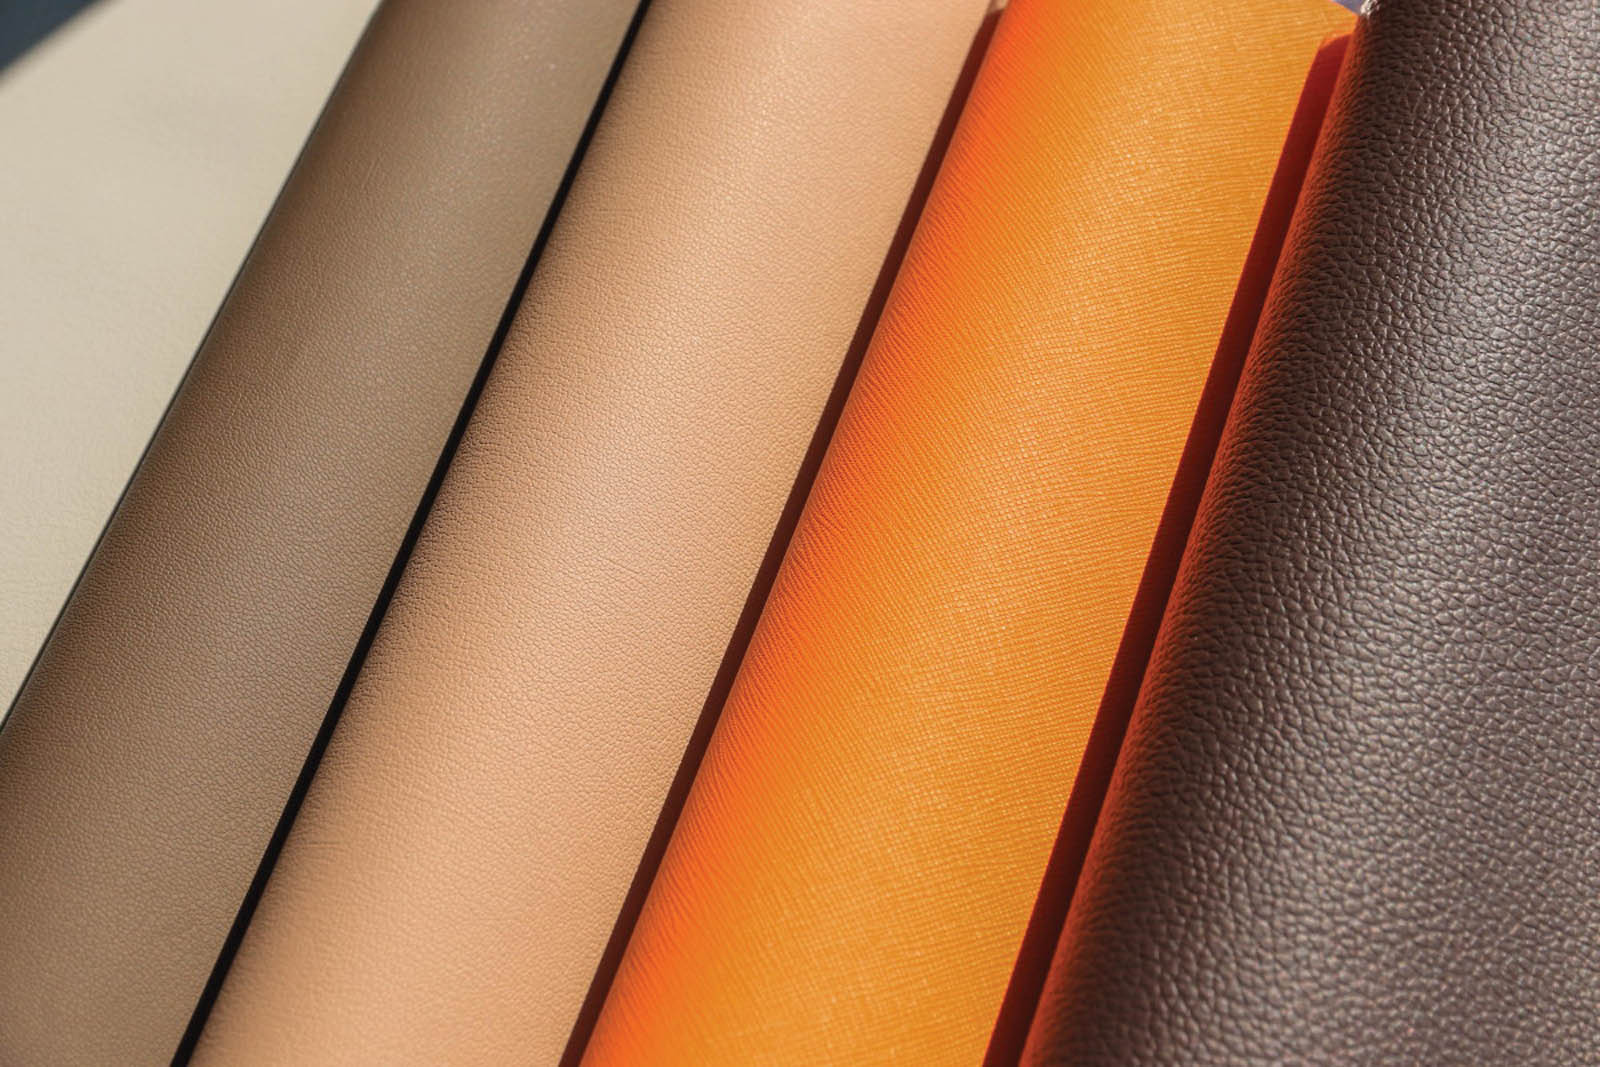 Vegan leather upholstery fabric - Marine Fabricator